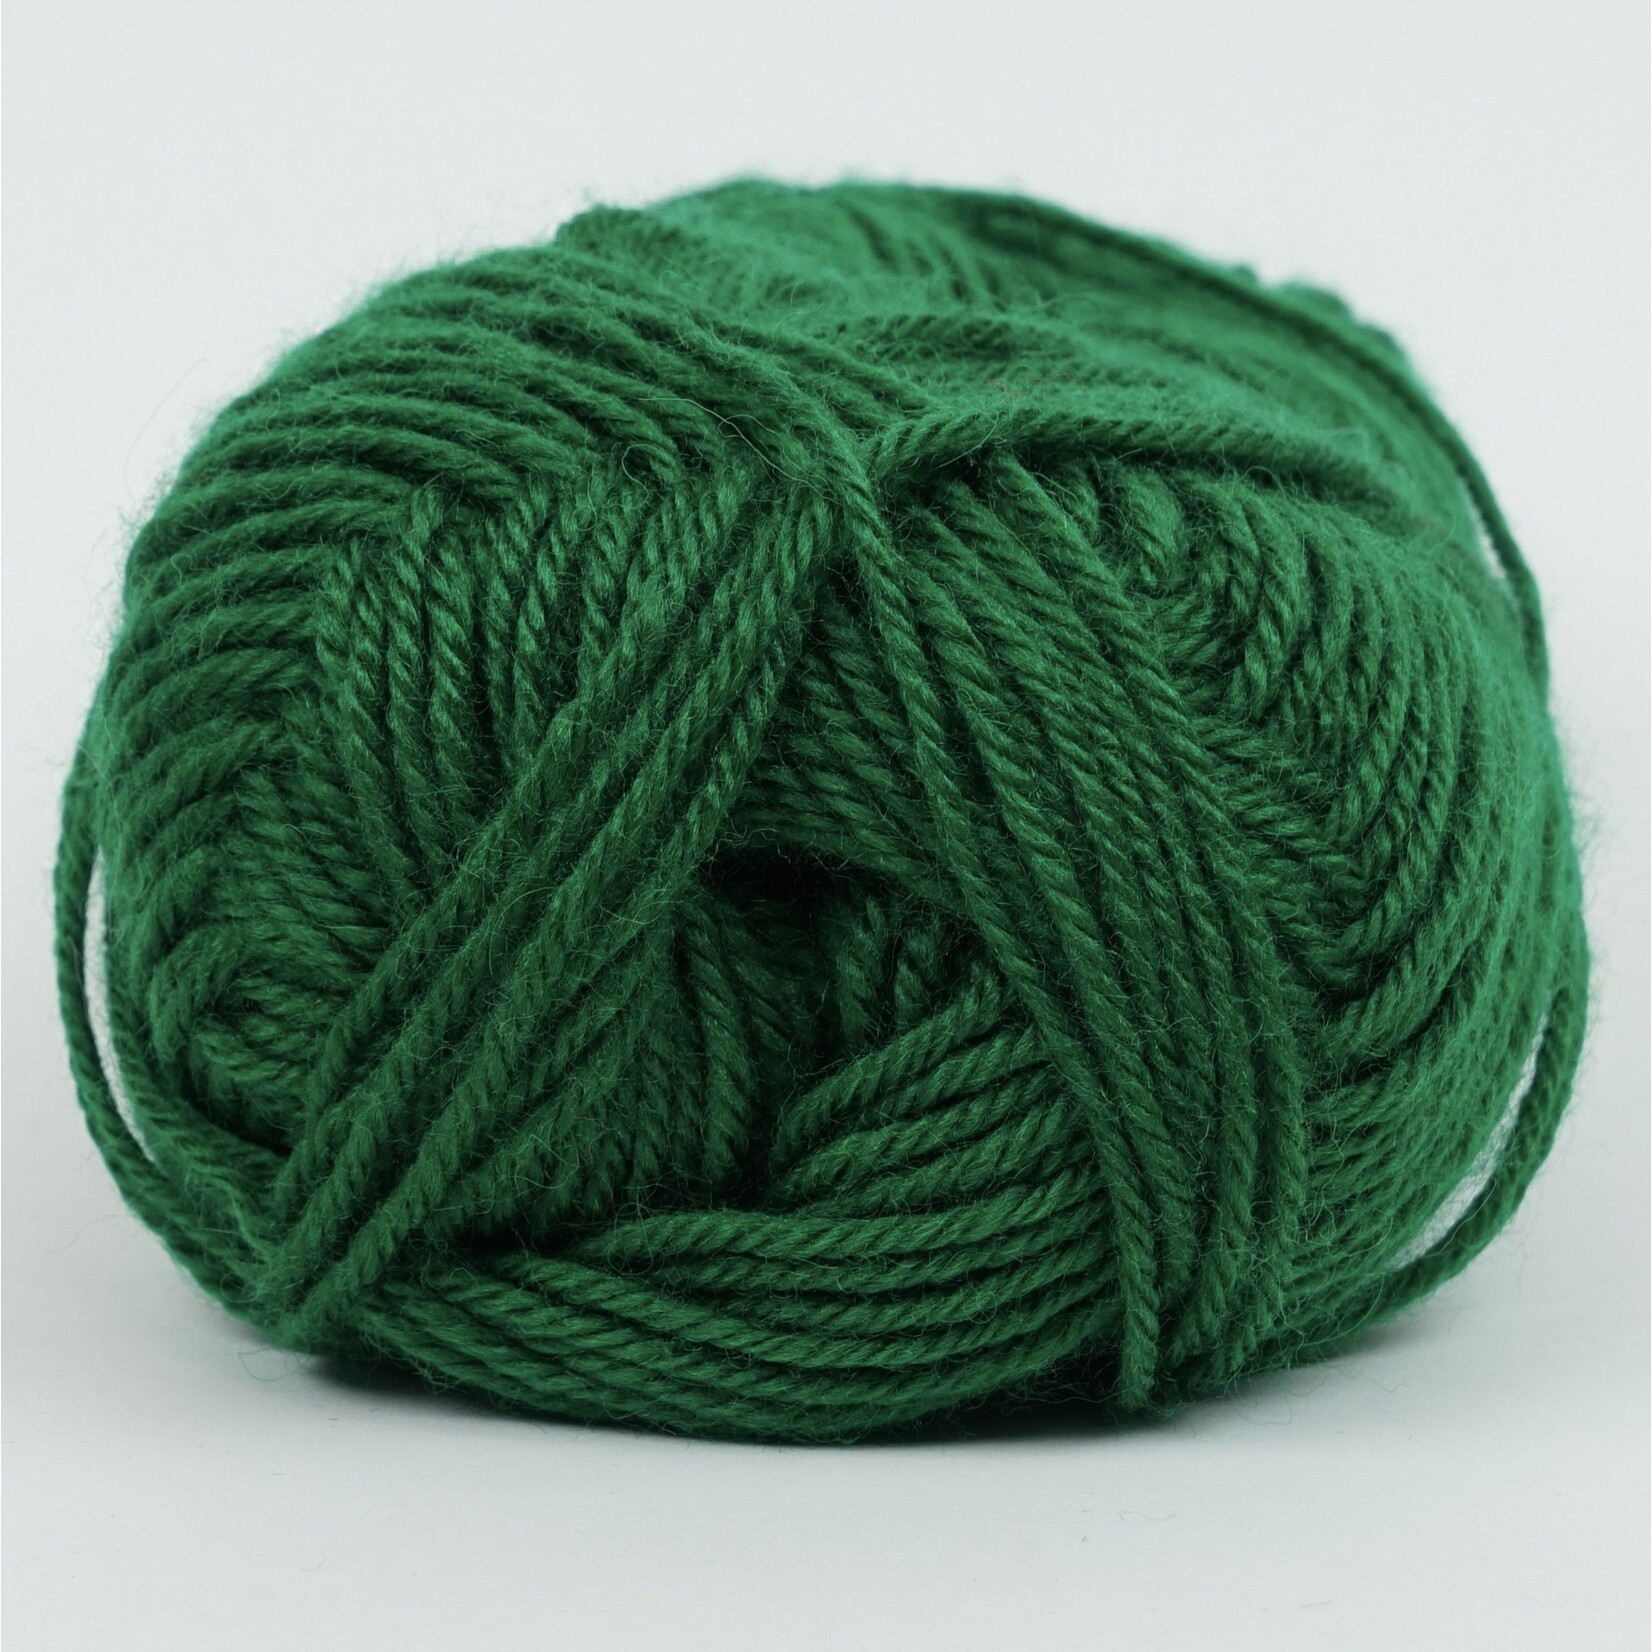 Kraemer Yarns Yarn - Perfection Worsted Bright Green